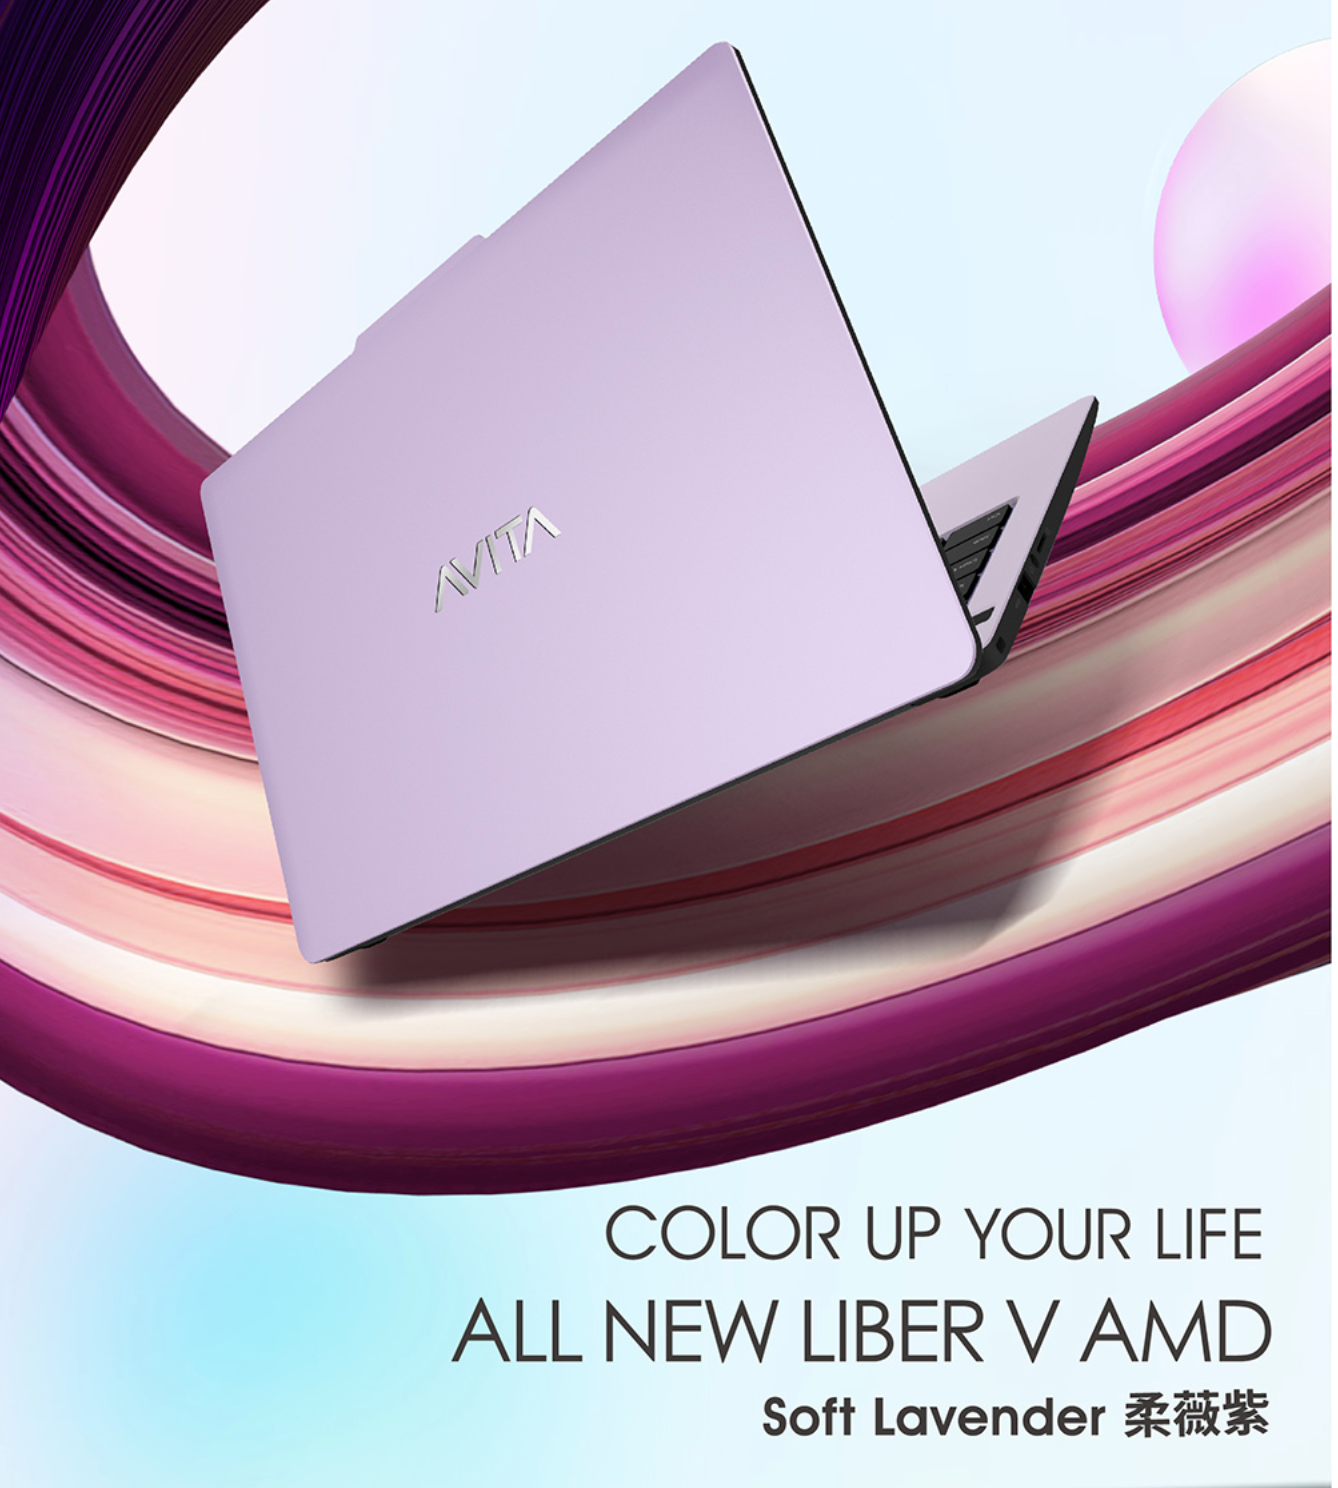 AVITA LIBER V 14吋AMD時尚炫彩筆電 柔薇紫(R5- 3500U/8G/512GB SSD/Win10)